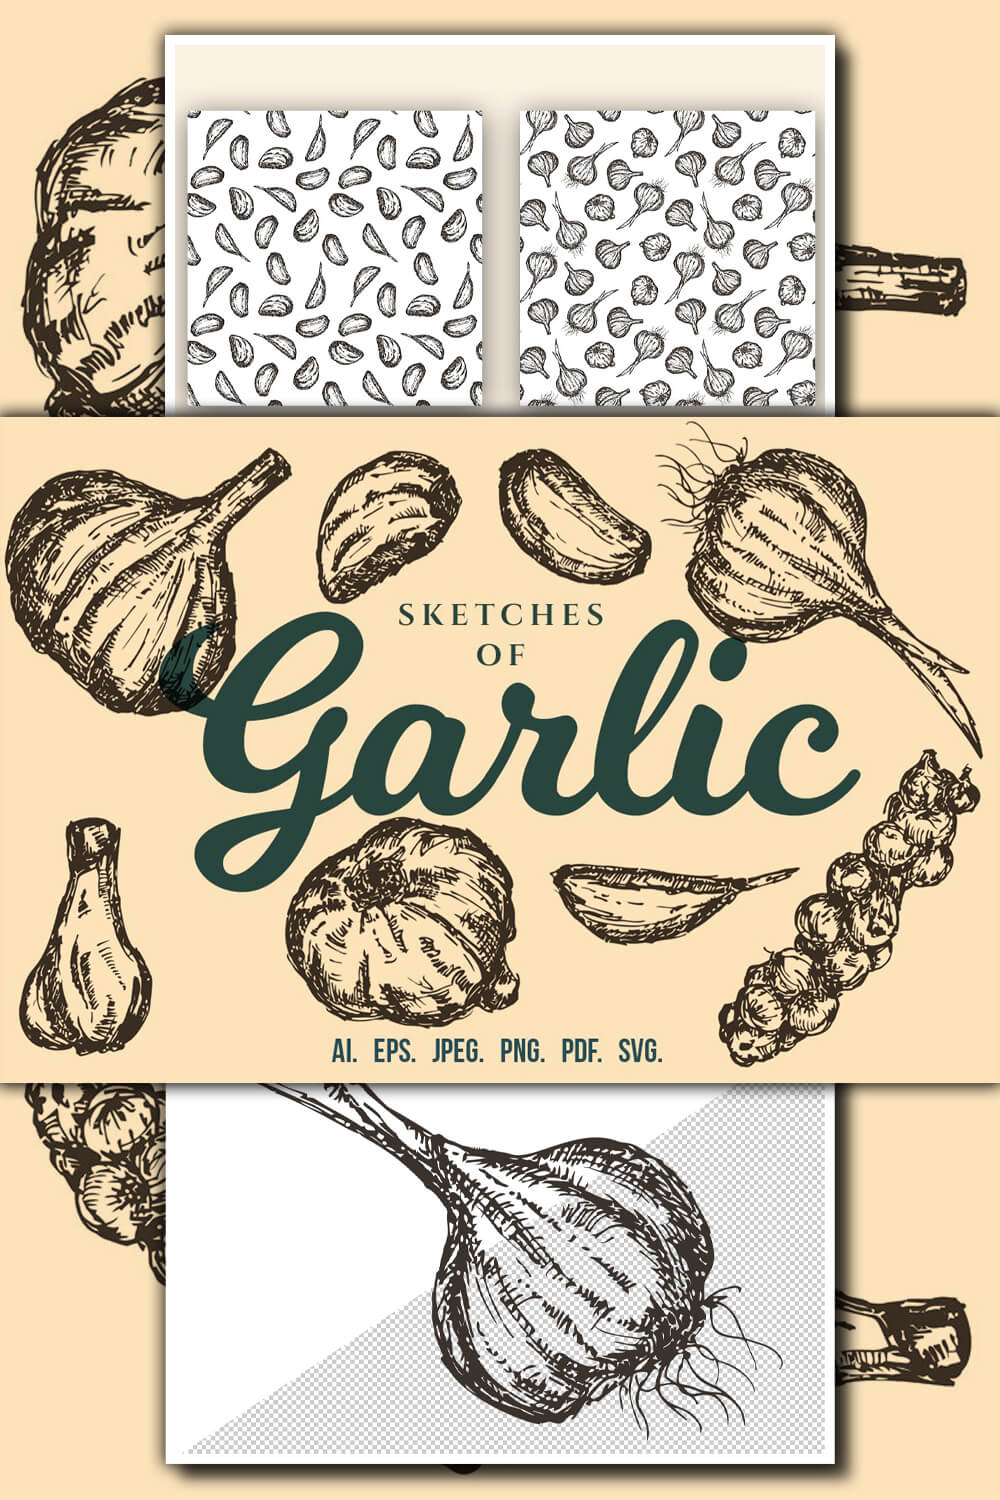 Thumbnails of onion and garlic prints.